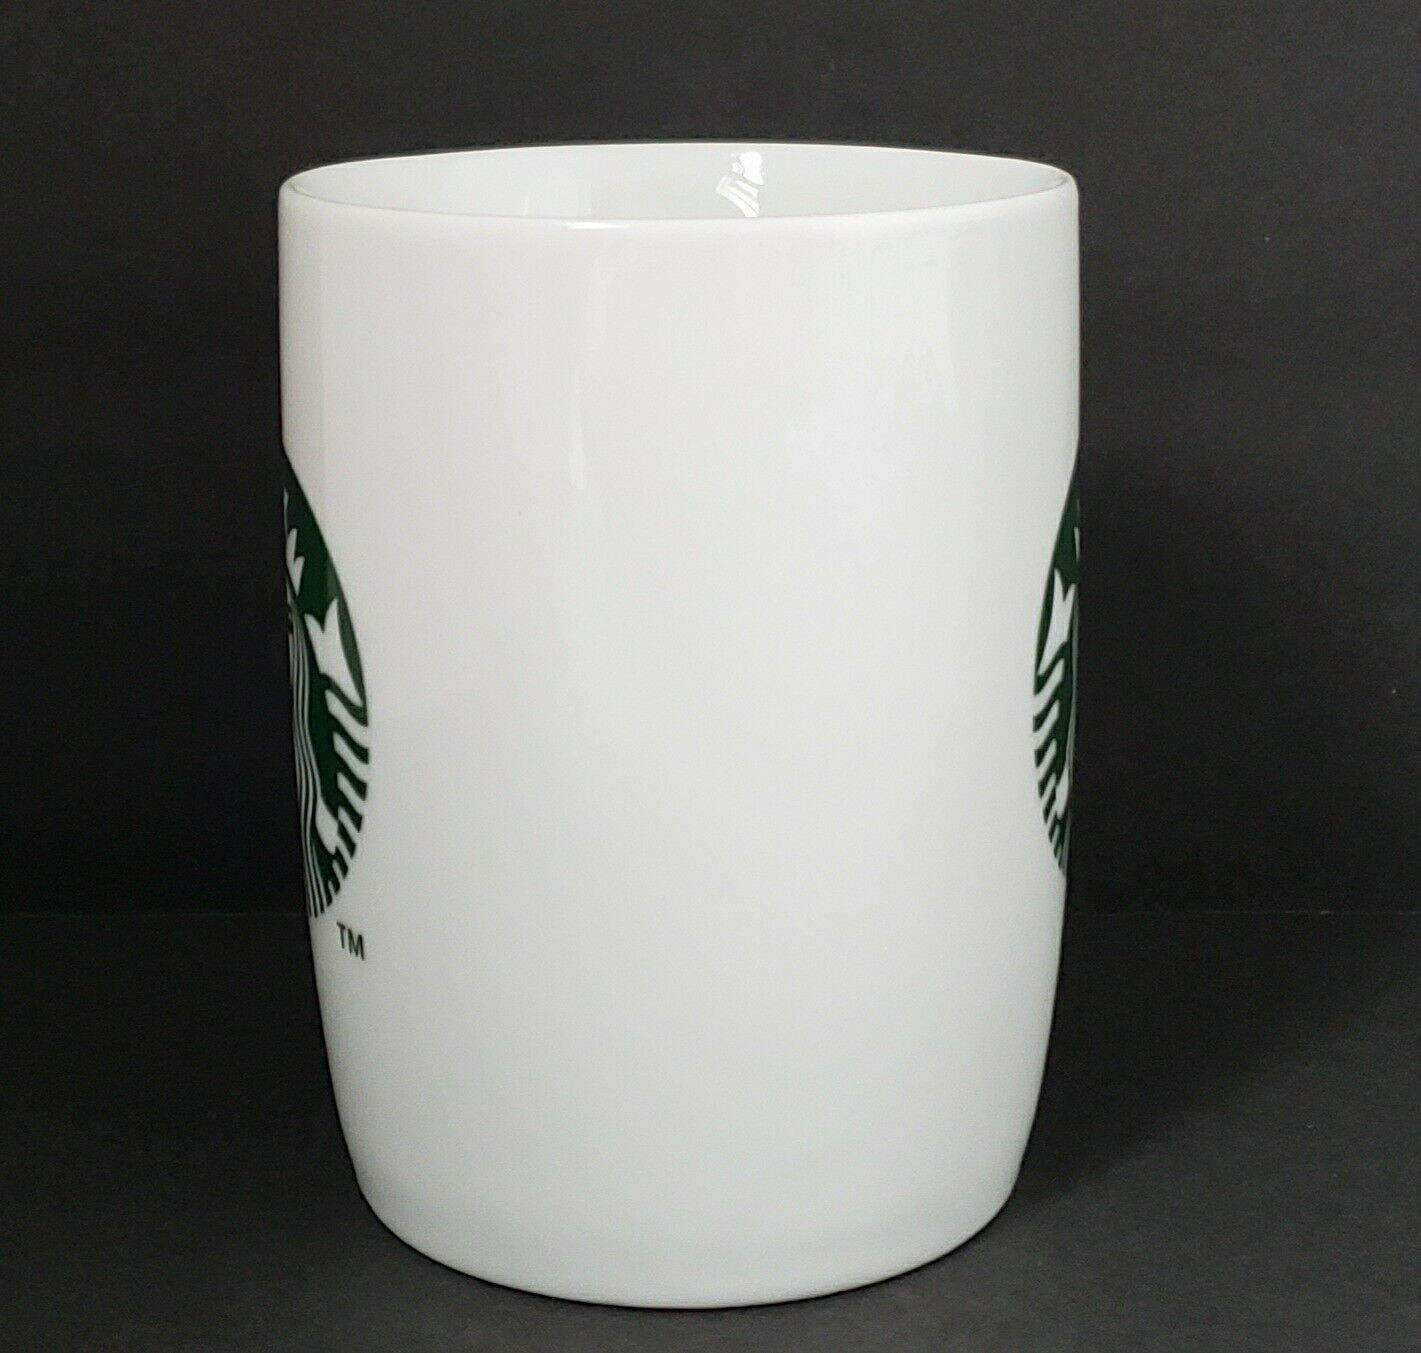 Primary image for 2013 Starbucks Coffee Mug Cup 10 oz. Green Mermaid Logo